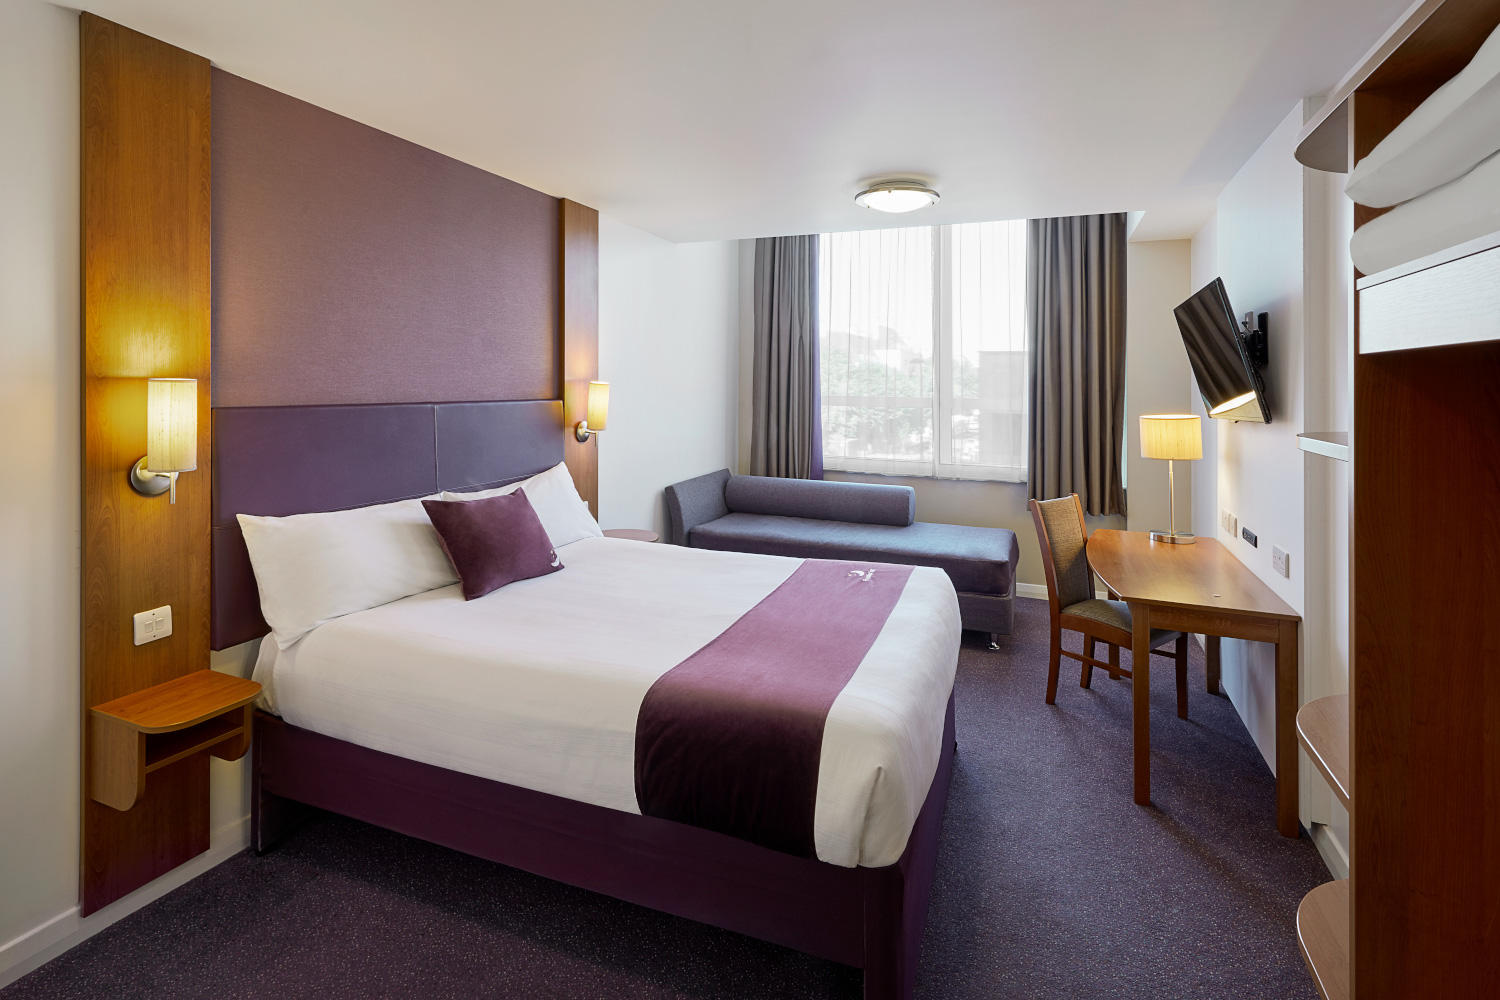 Premier Inn bedroom Premier Inn Plymouth City (Lockyers Quay) hotel Plymouth 03333 211392